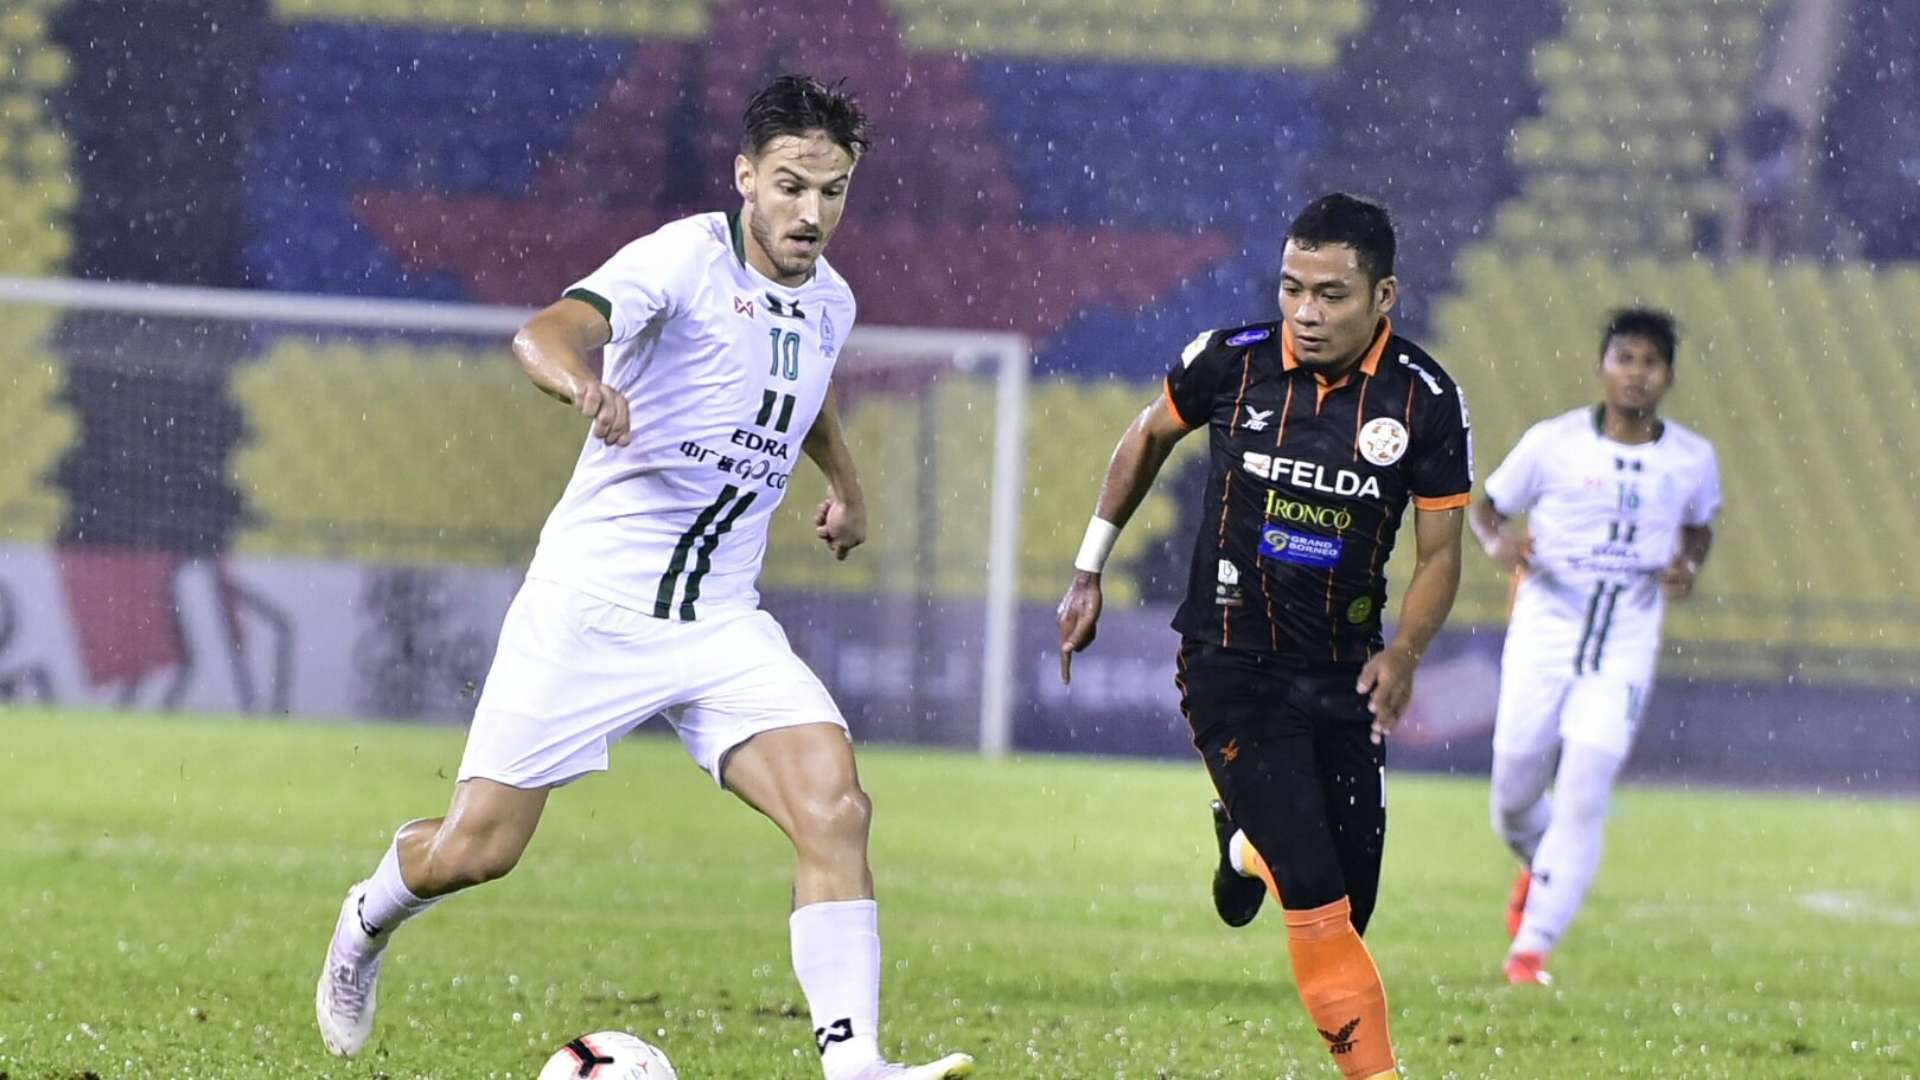 Luka Milunovic, Melaka v Felda, Malaysia Super League, 15 May 2019